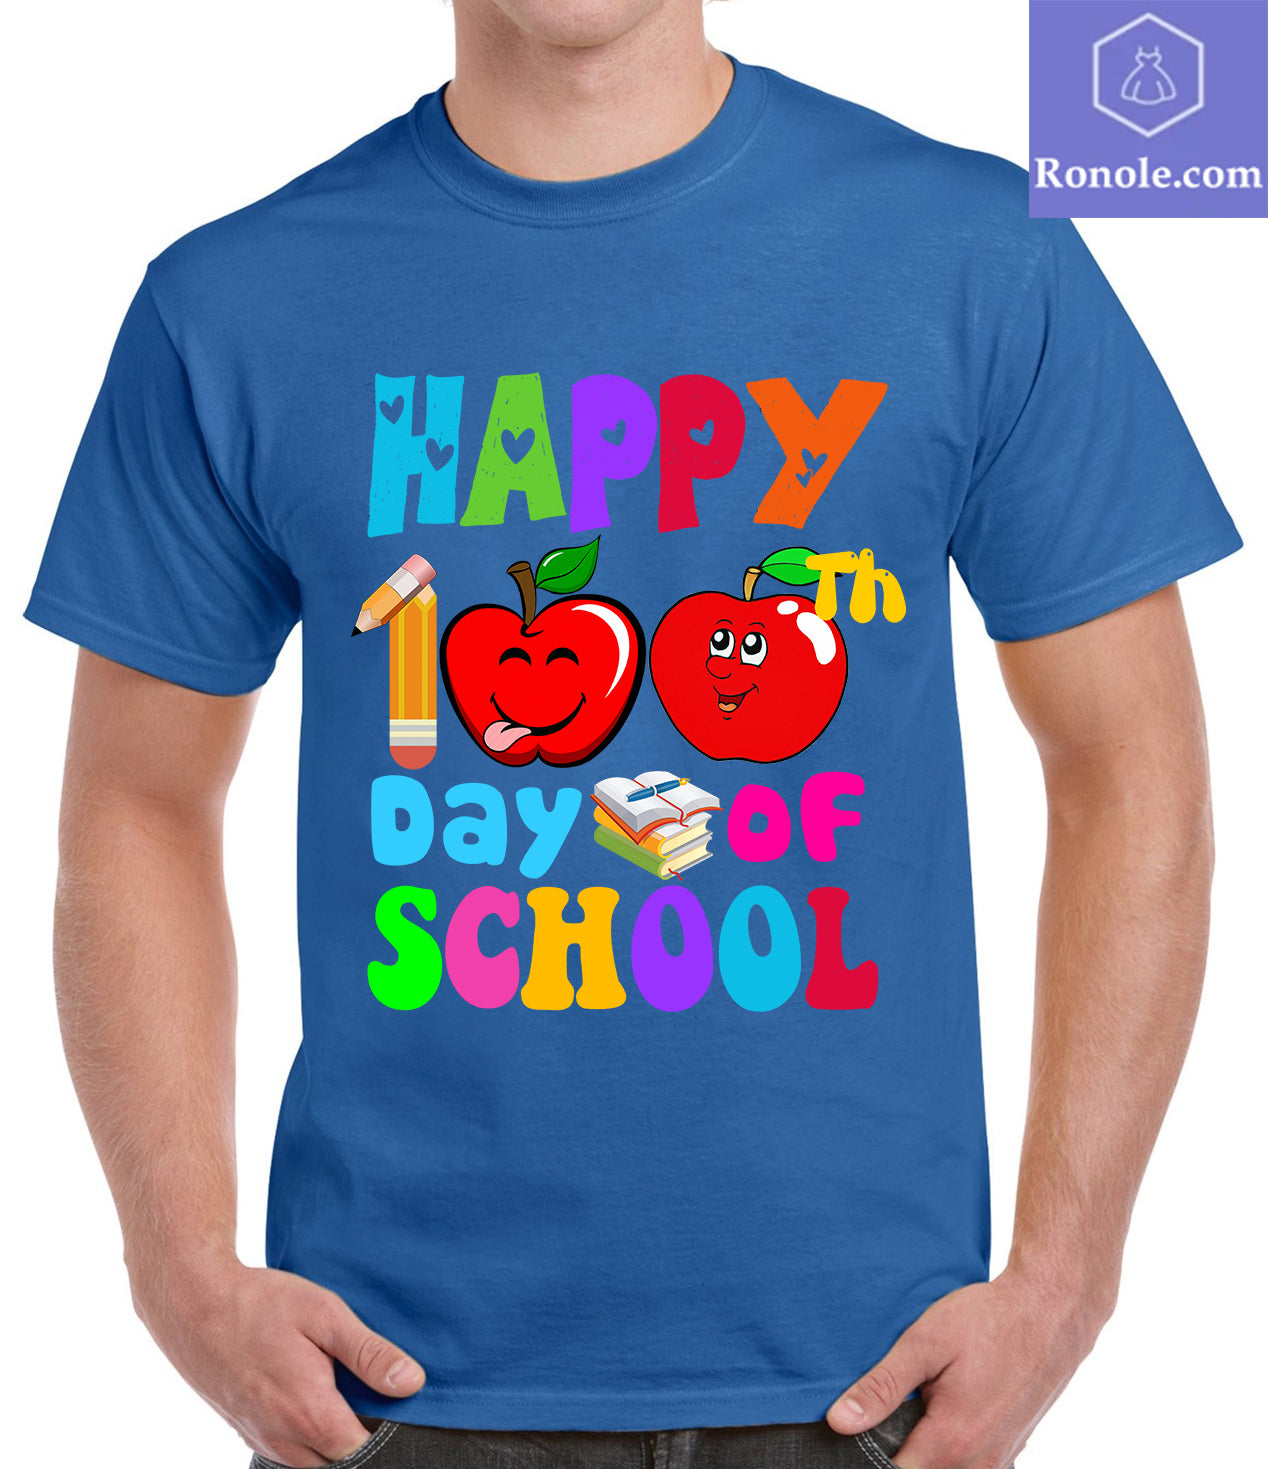 one hundred days of school shirt ideas